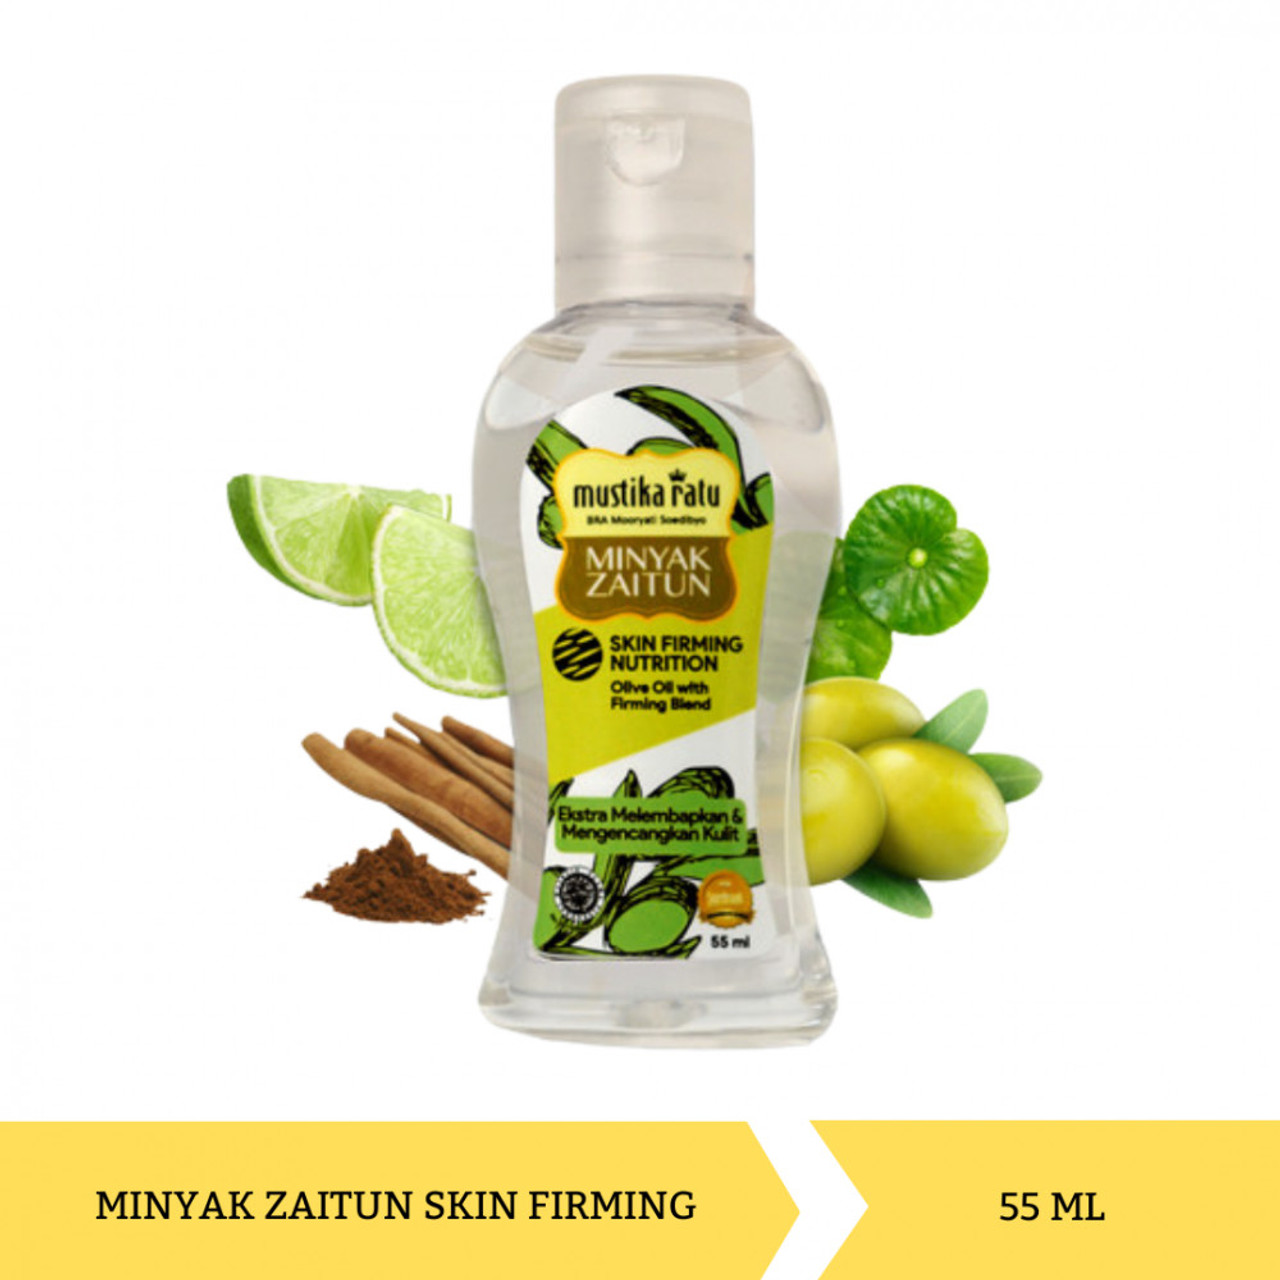 Mustika Ratu Minyak Zaitun & Aromatic Essential Oil - Skin Firming Nutrition, 55 ml